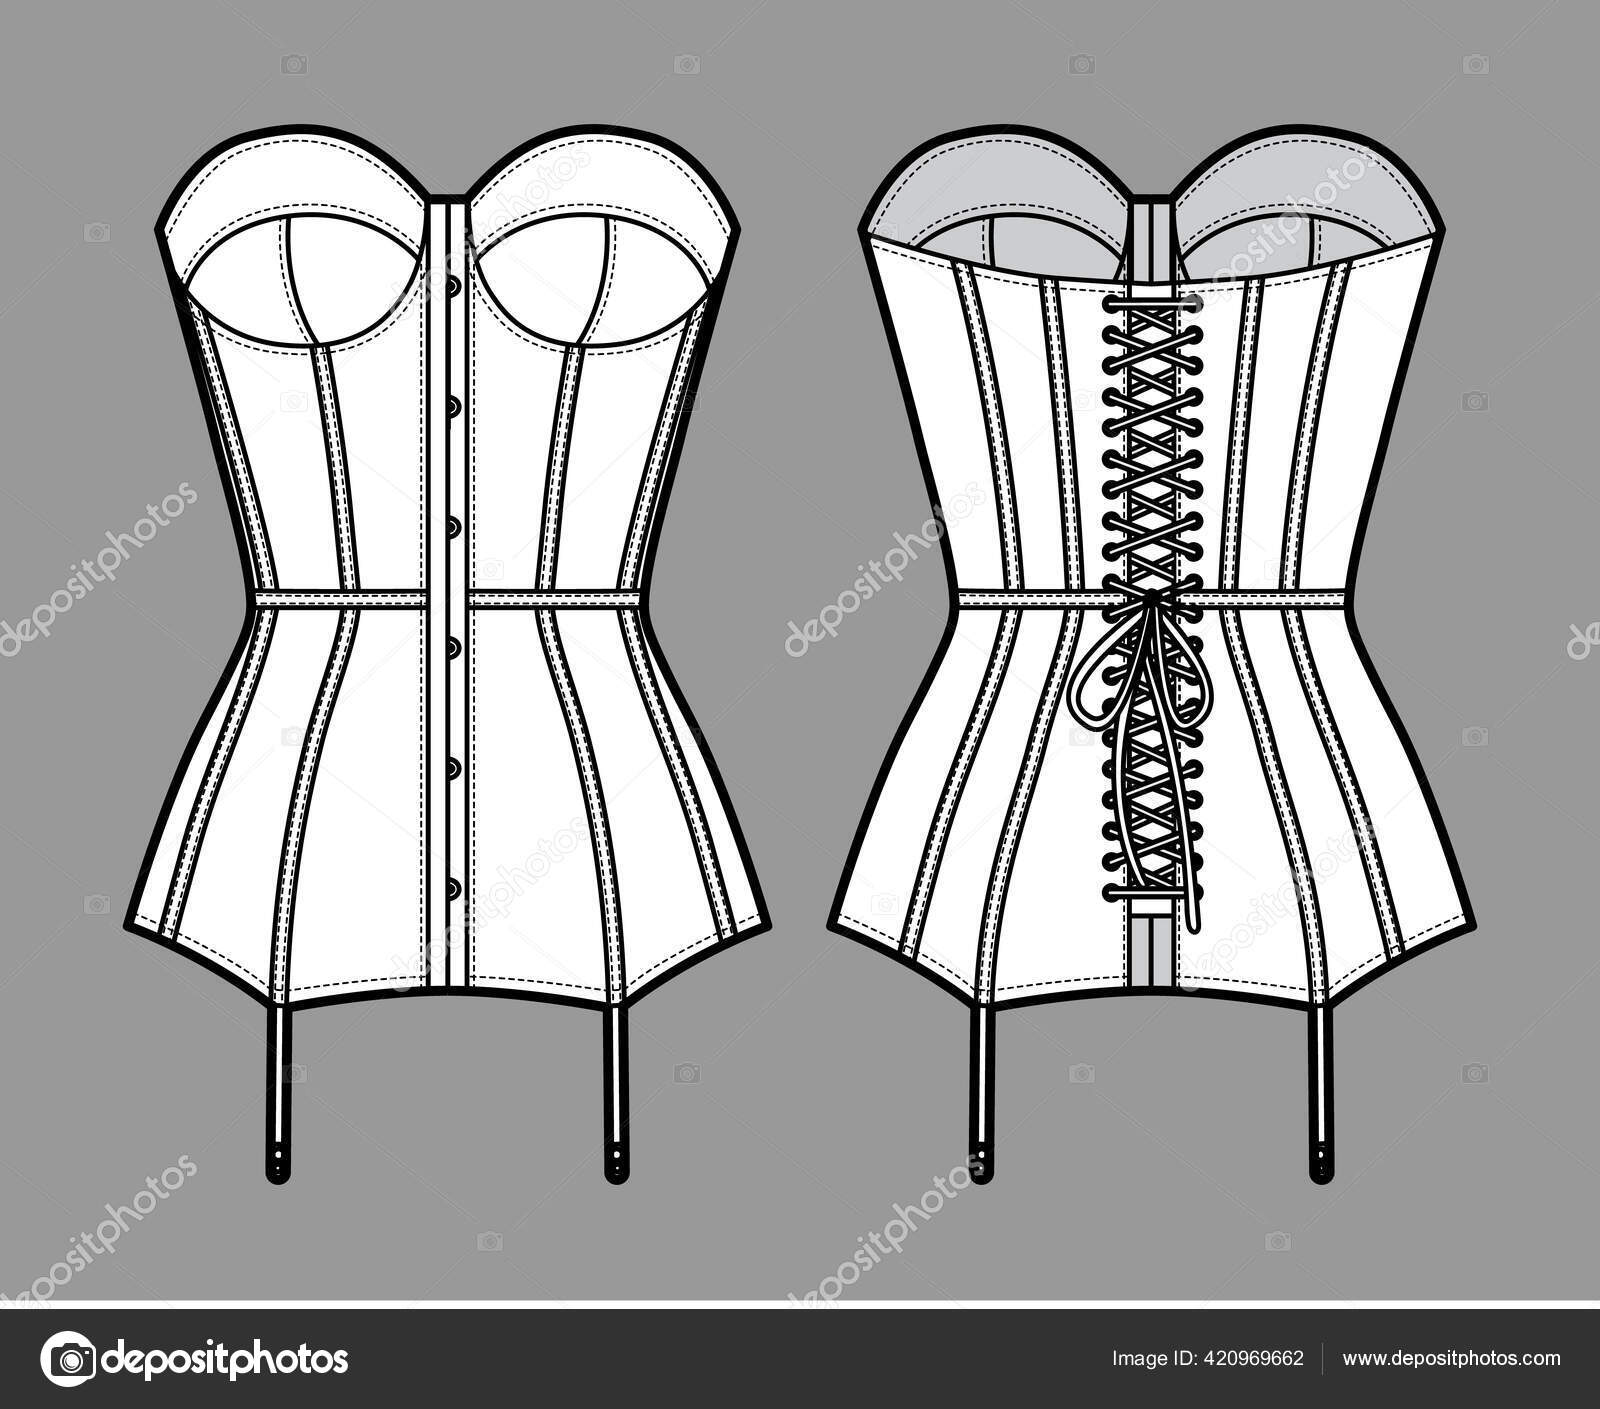 https://st2.depositphotos.com/27230386/42096/v/1600/depositphotos_420969662-stock-illustration-torsolette-basque-bustier-lingerie-technical.jpg